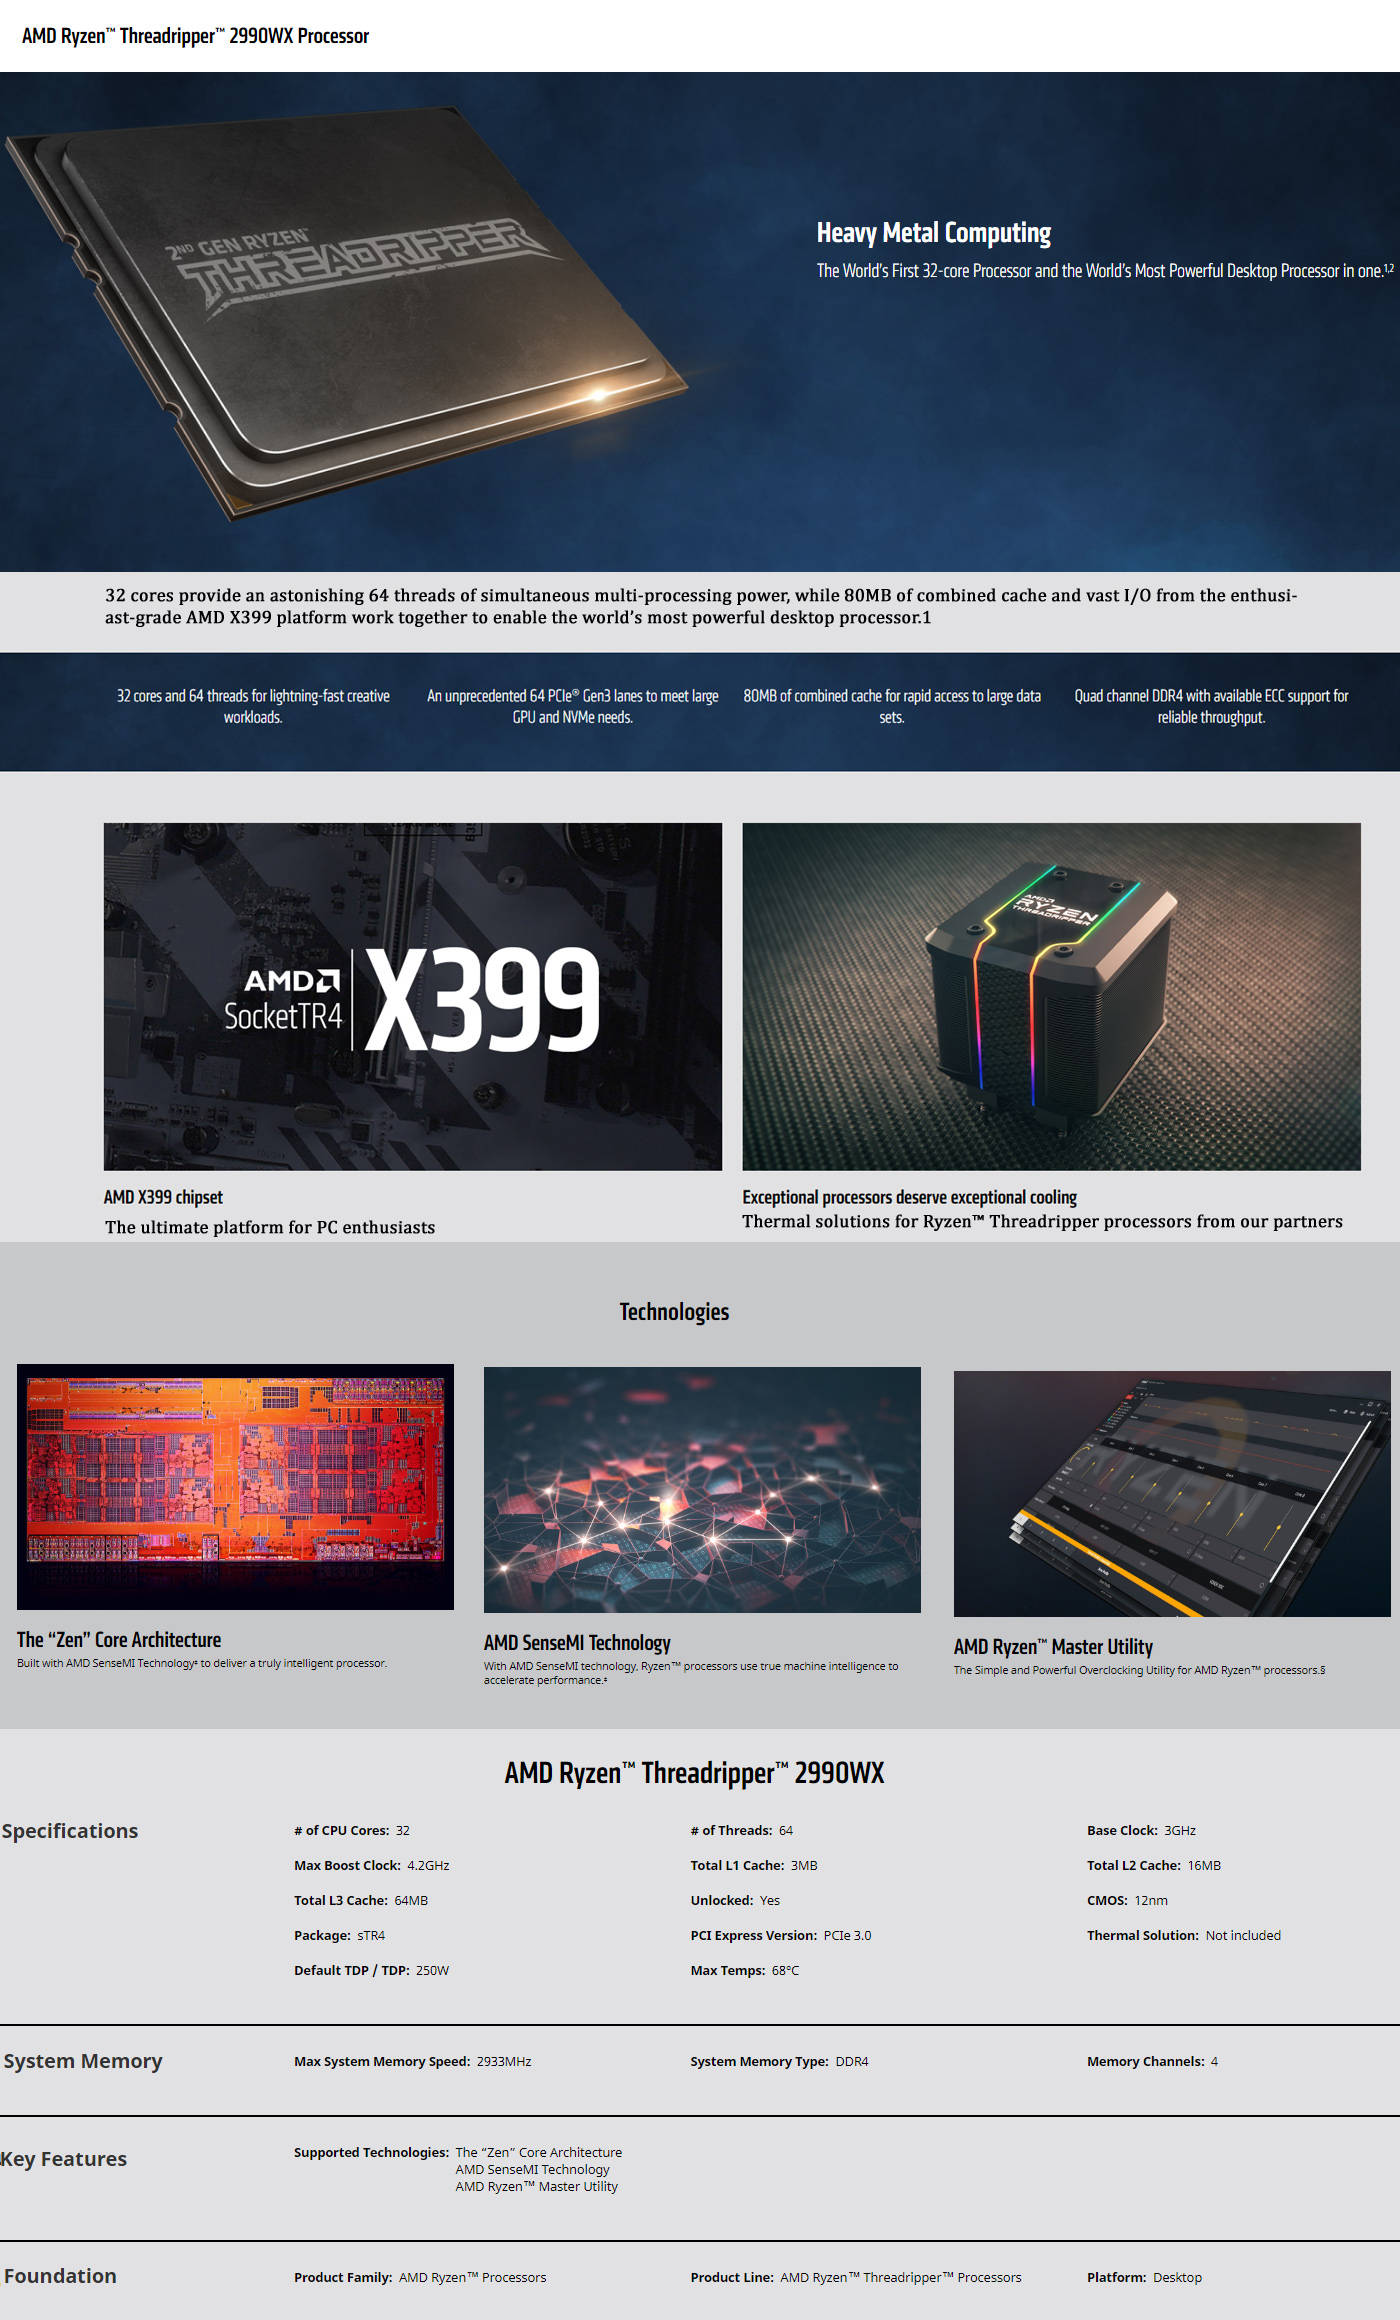  Buy Online AMD RYZEN Threadripper 2990WX 3.0 GHz Processor